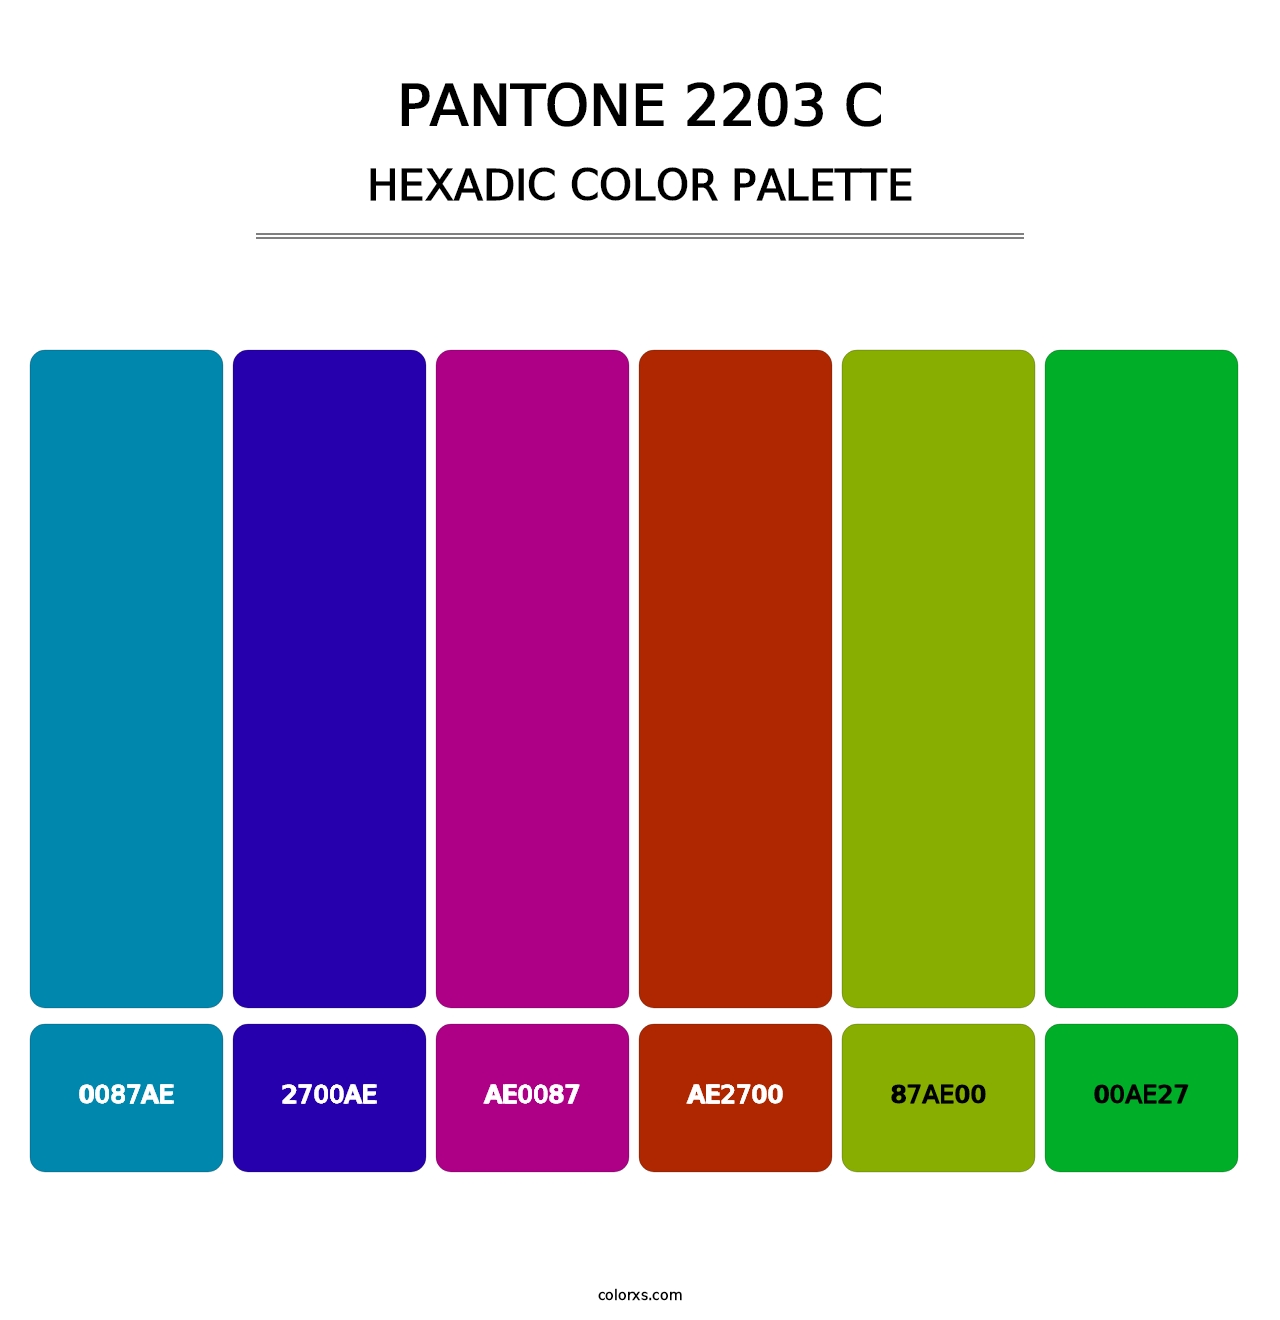 PANTONE 2203 C - Hexadic Color Palette